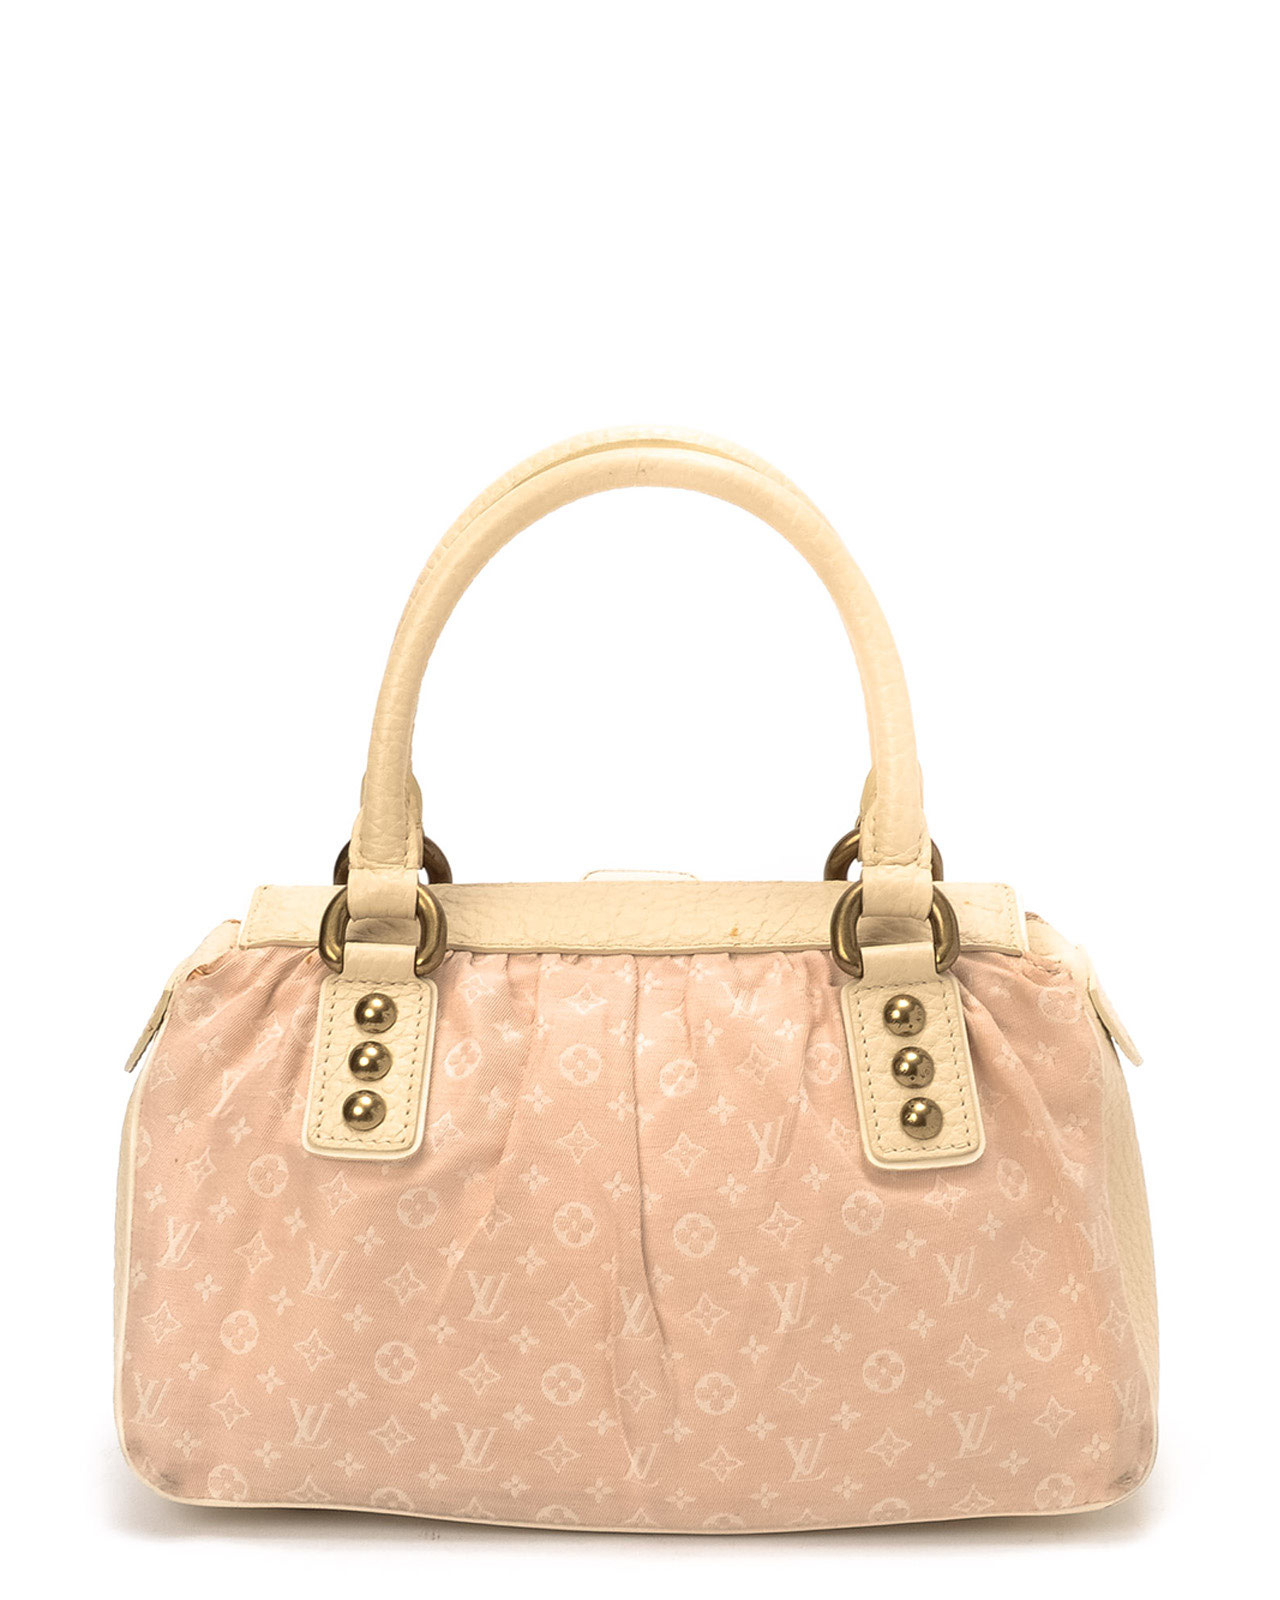 Lyst - Louis Vuitton Pink Trapeze Pm Handbag in Pink